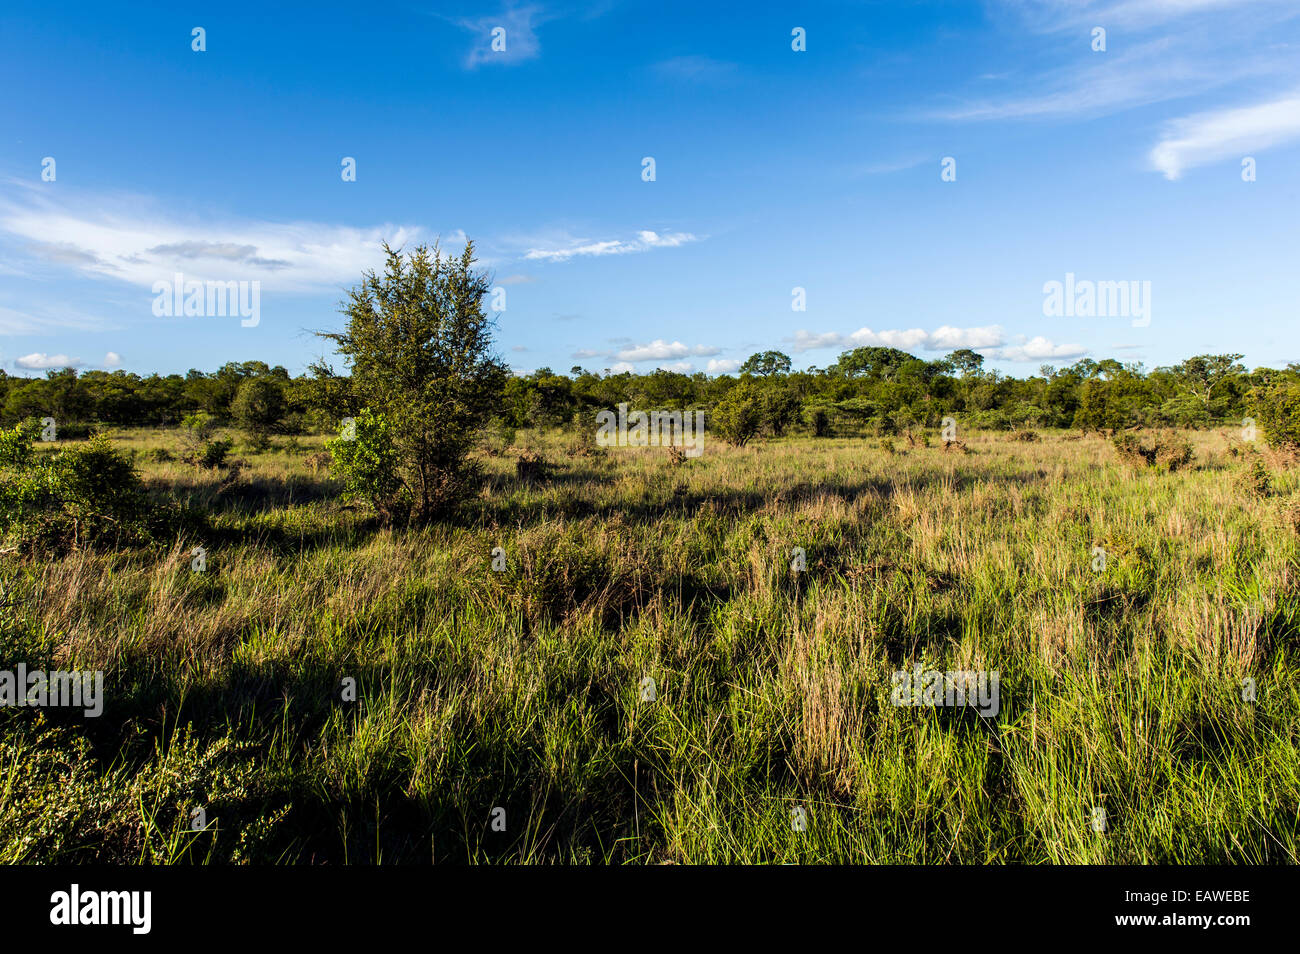 A grassland floodplain lush with new growth after the rainy season. Stock Photo